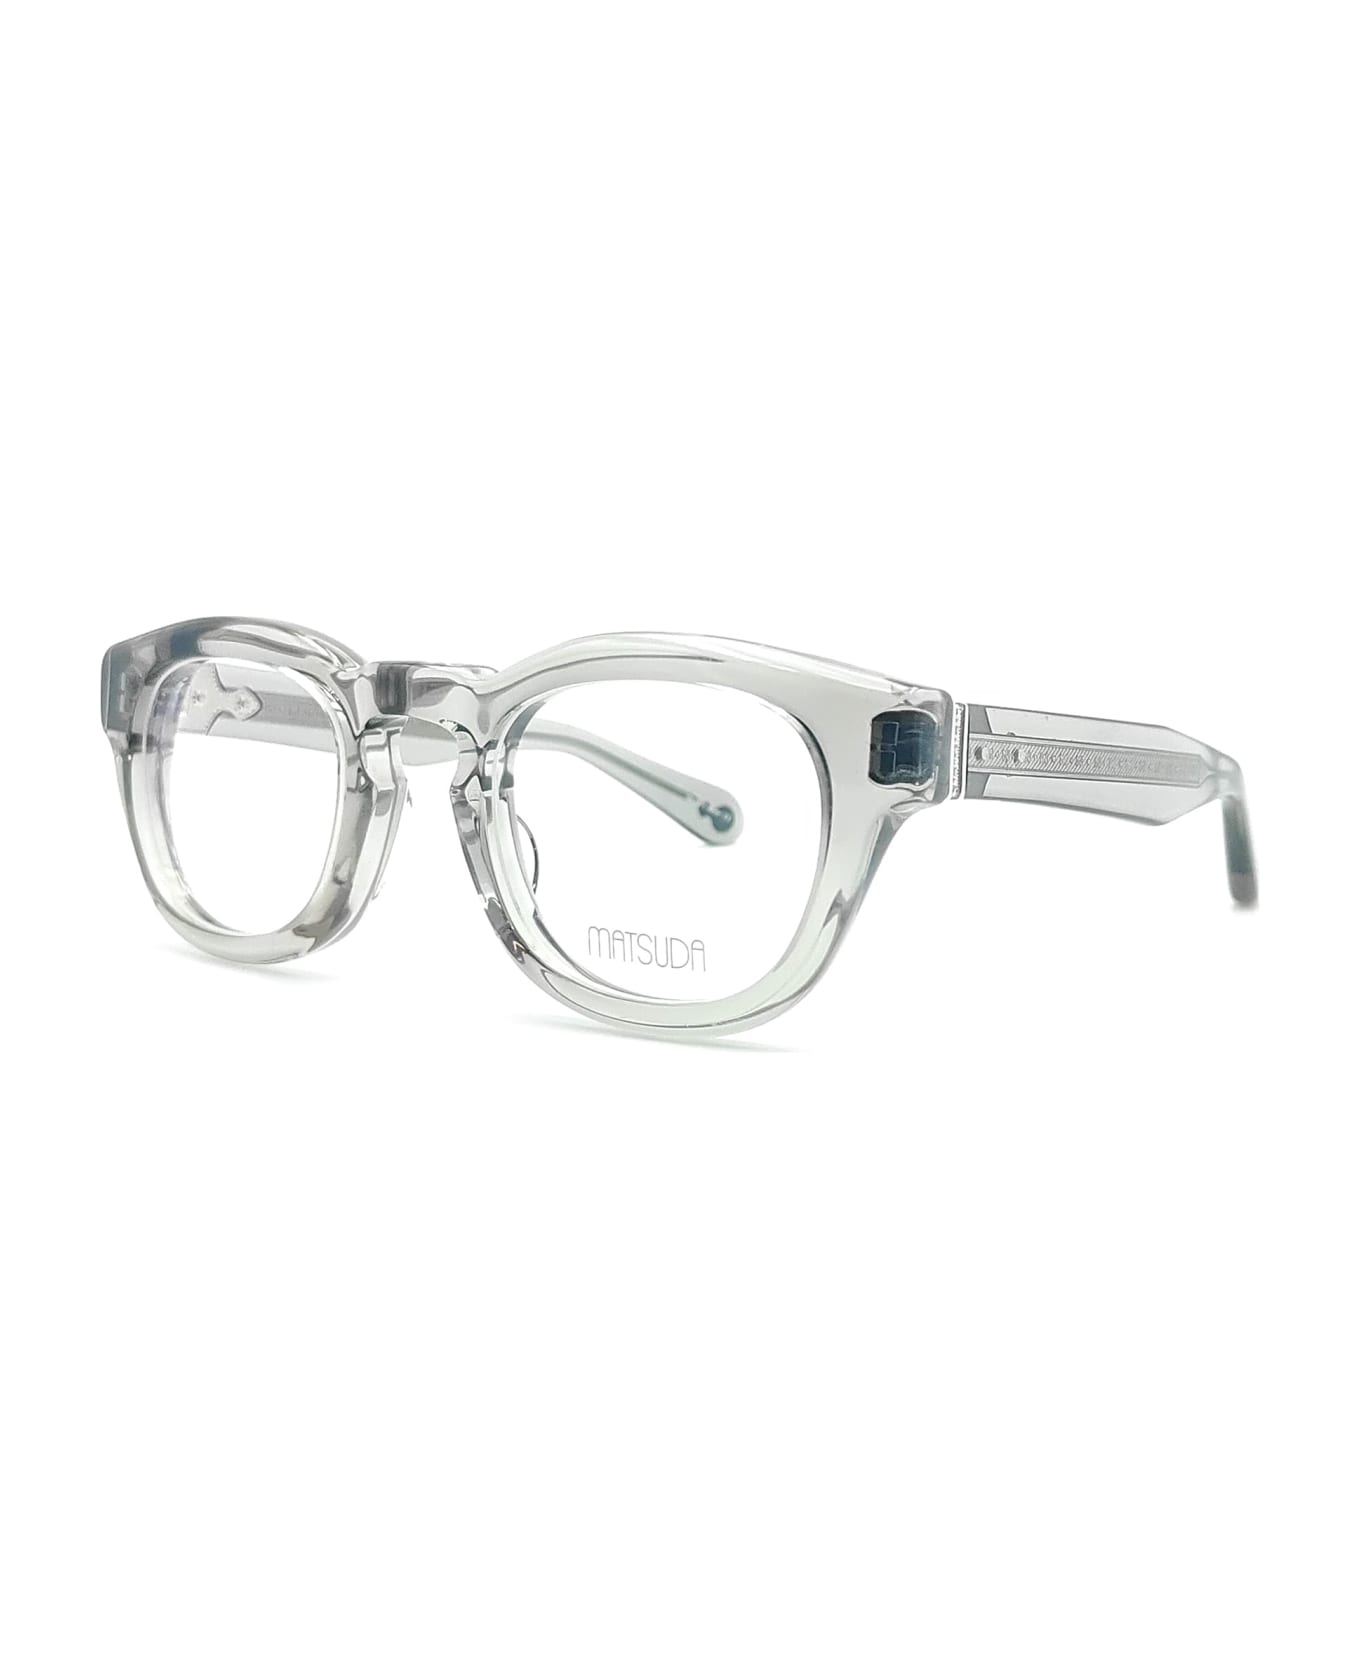 Matsuda M1029 - Grey Crystal Rx Glasses - grey アイウェア